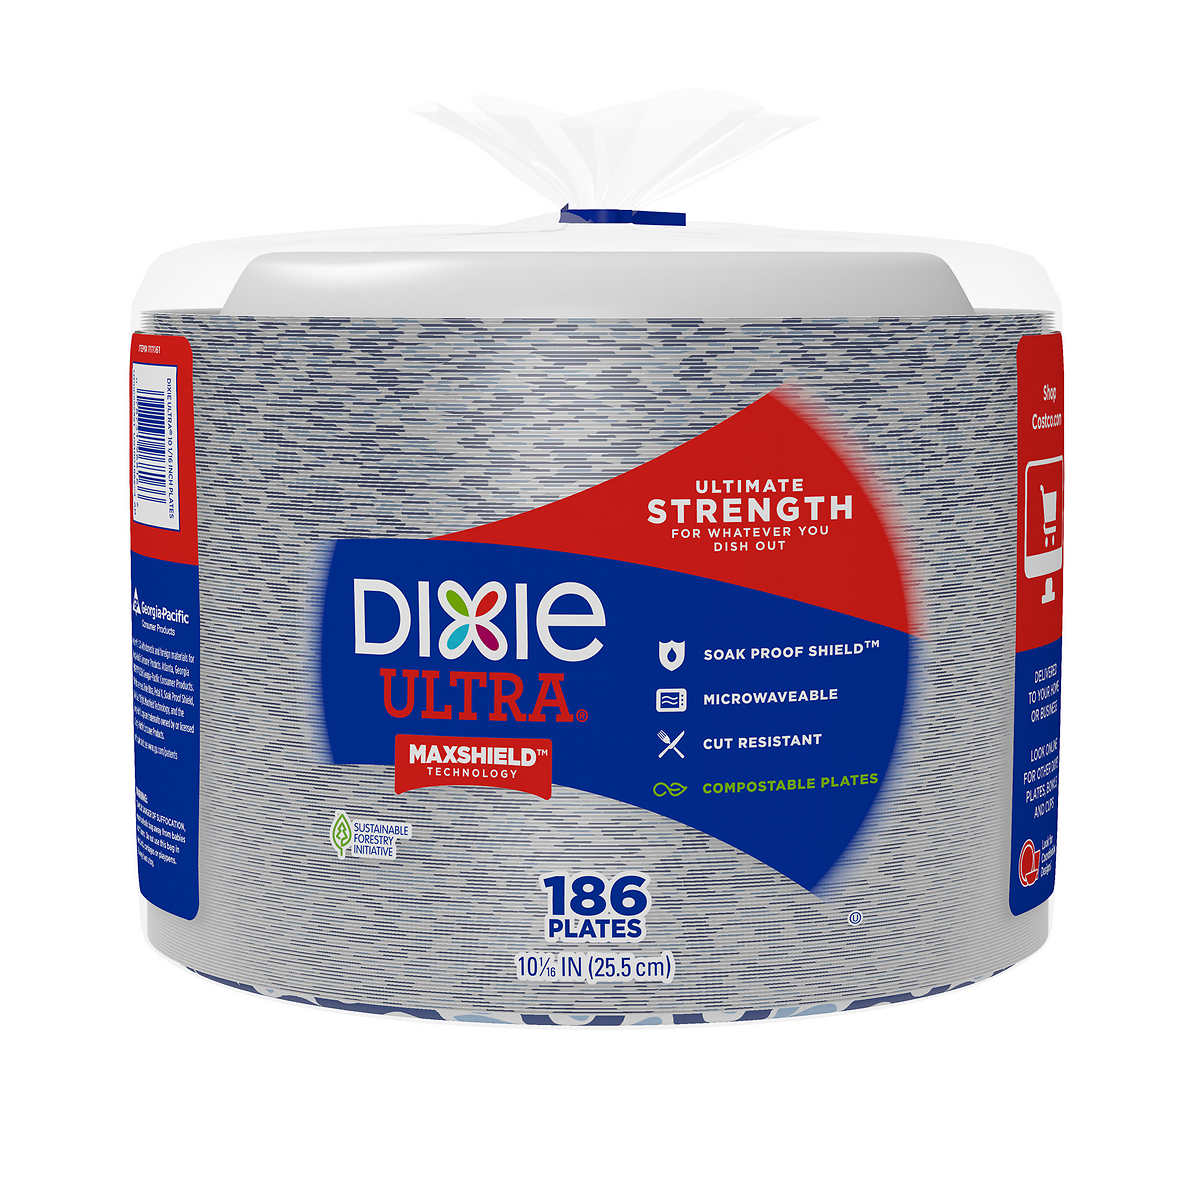 Dixie Everyday Paper Plates, Paisley Purple, 10-1/16 - 86 count